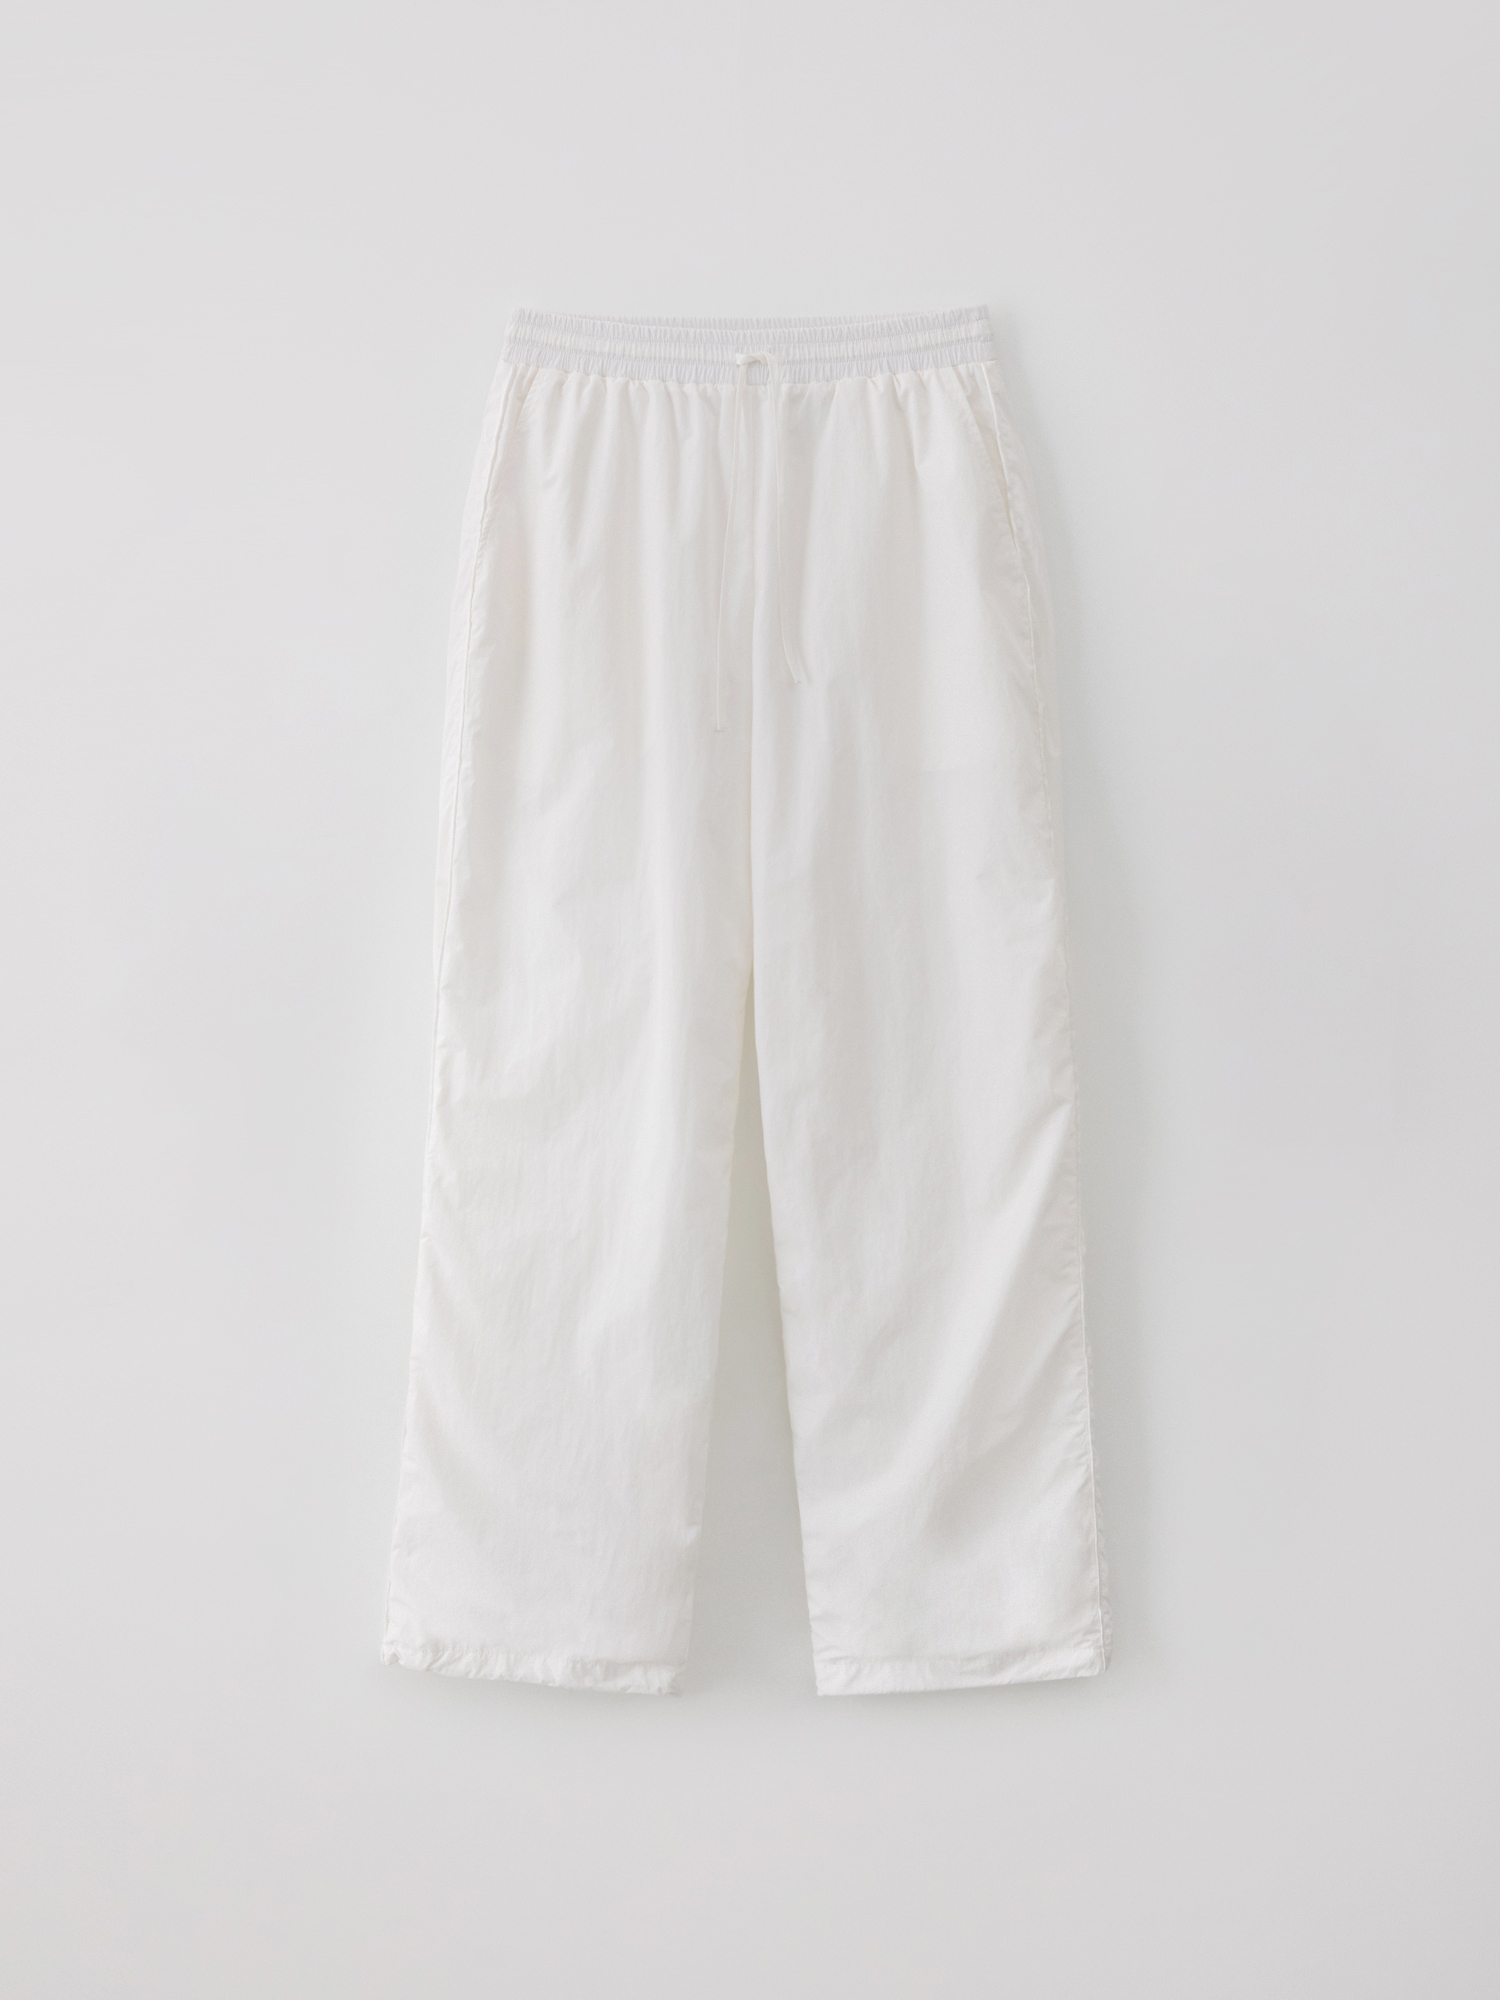 [3rd reorder] Parachute pants (white)